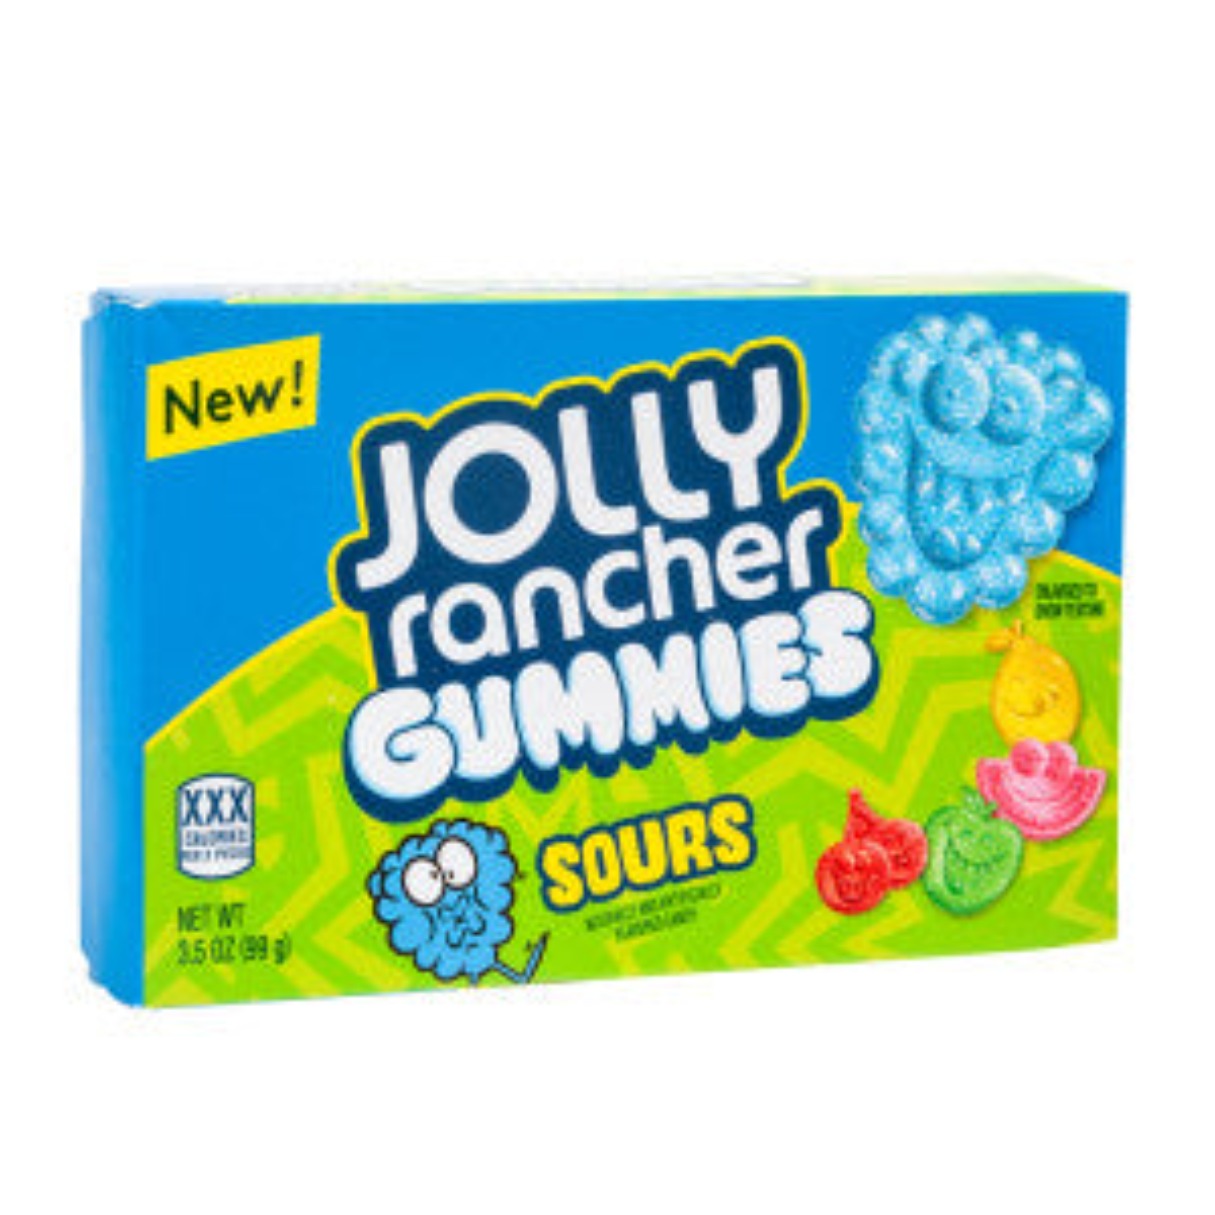 Jolly Rancher Sour Gummies Theater Box 3.5oz - 11ct